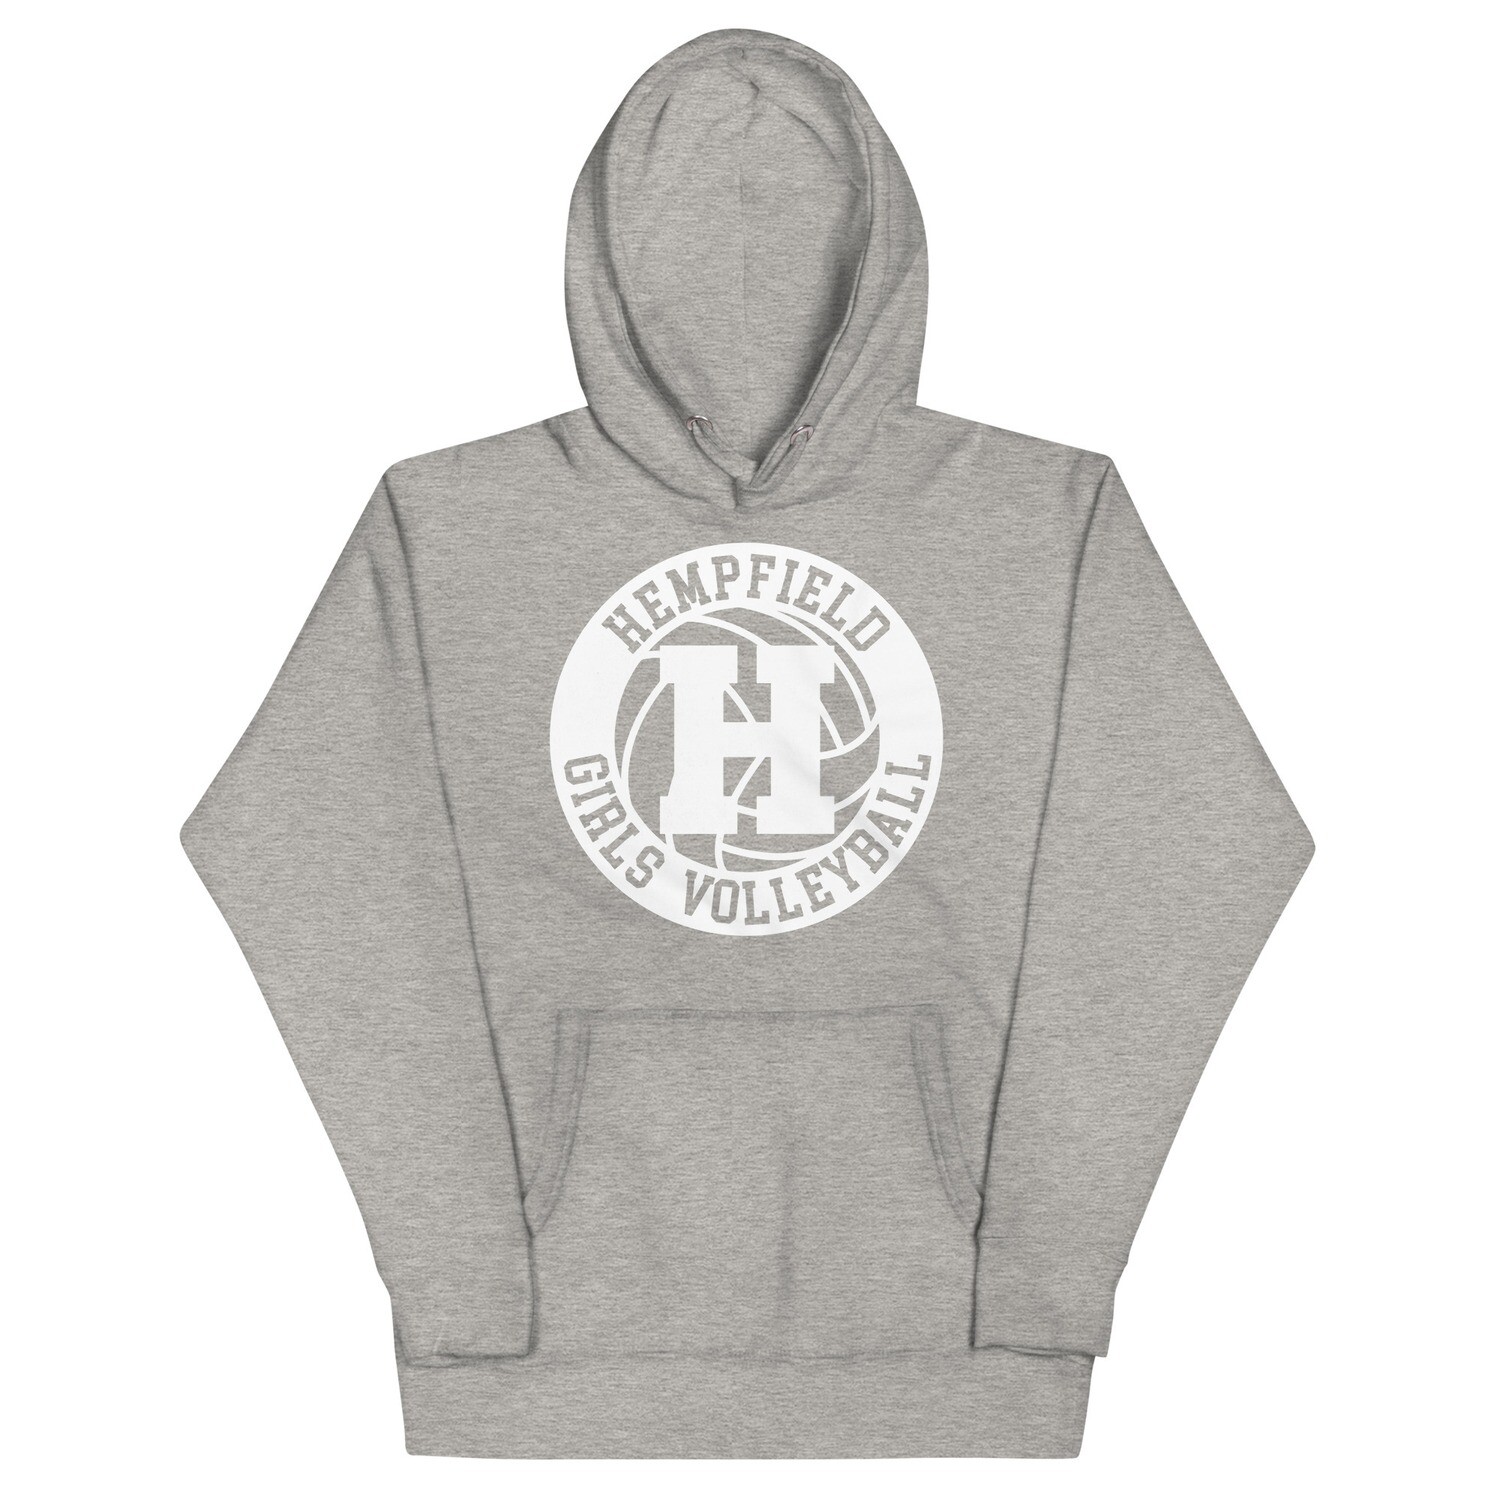 Hempfield Girls Volleyball Premium Hoodie